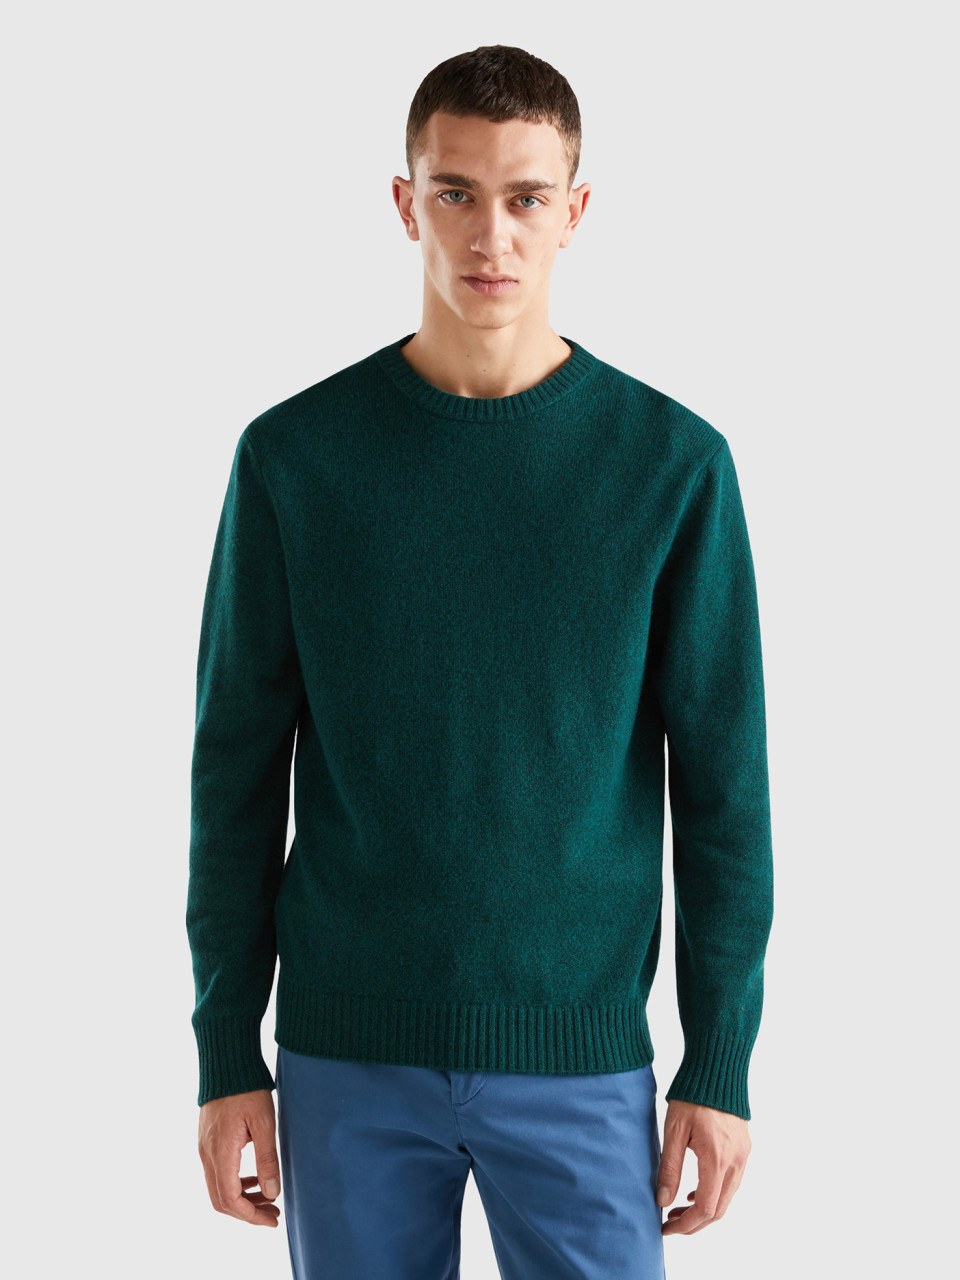 Benetton, Crew Neck Sweater In Cashmere And Wool Blend, Dark Green, Men